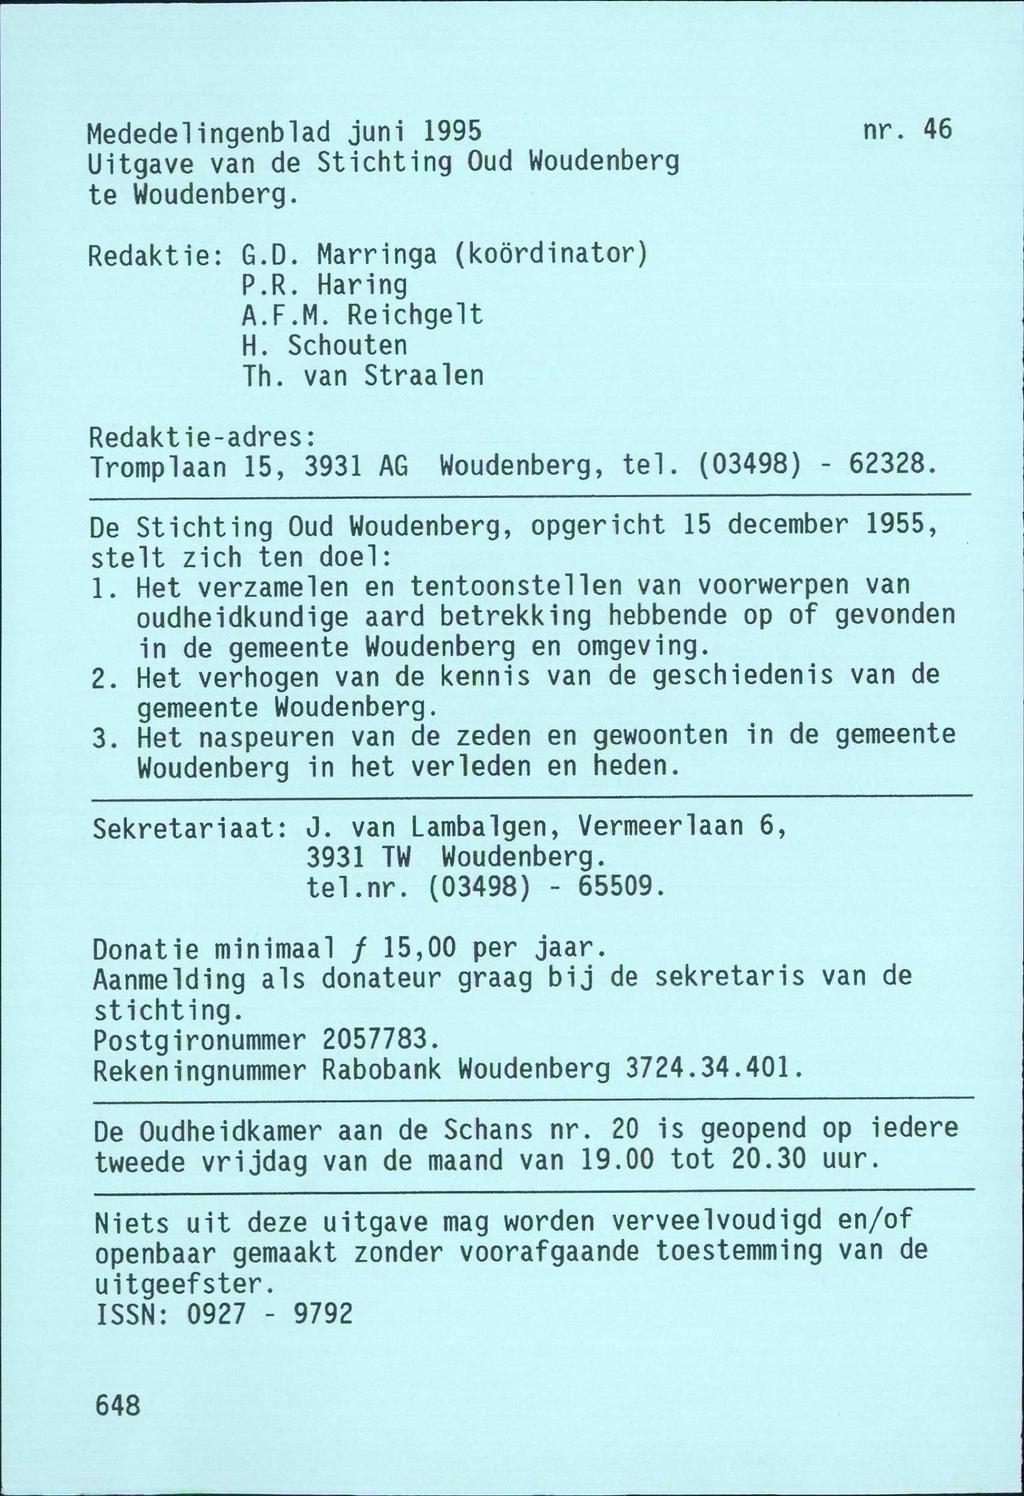 Mededelingenblad juni 1995 nr. 46 Uitgave van de Stichting Oud Woudenberg te Woudenberg. Redaktie: G.D. Marringa (koördinator) P.R. Haring A.F.M. Reichgelt H. Schouten Th.